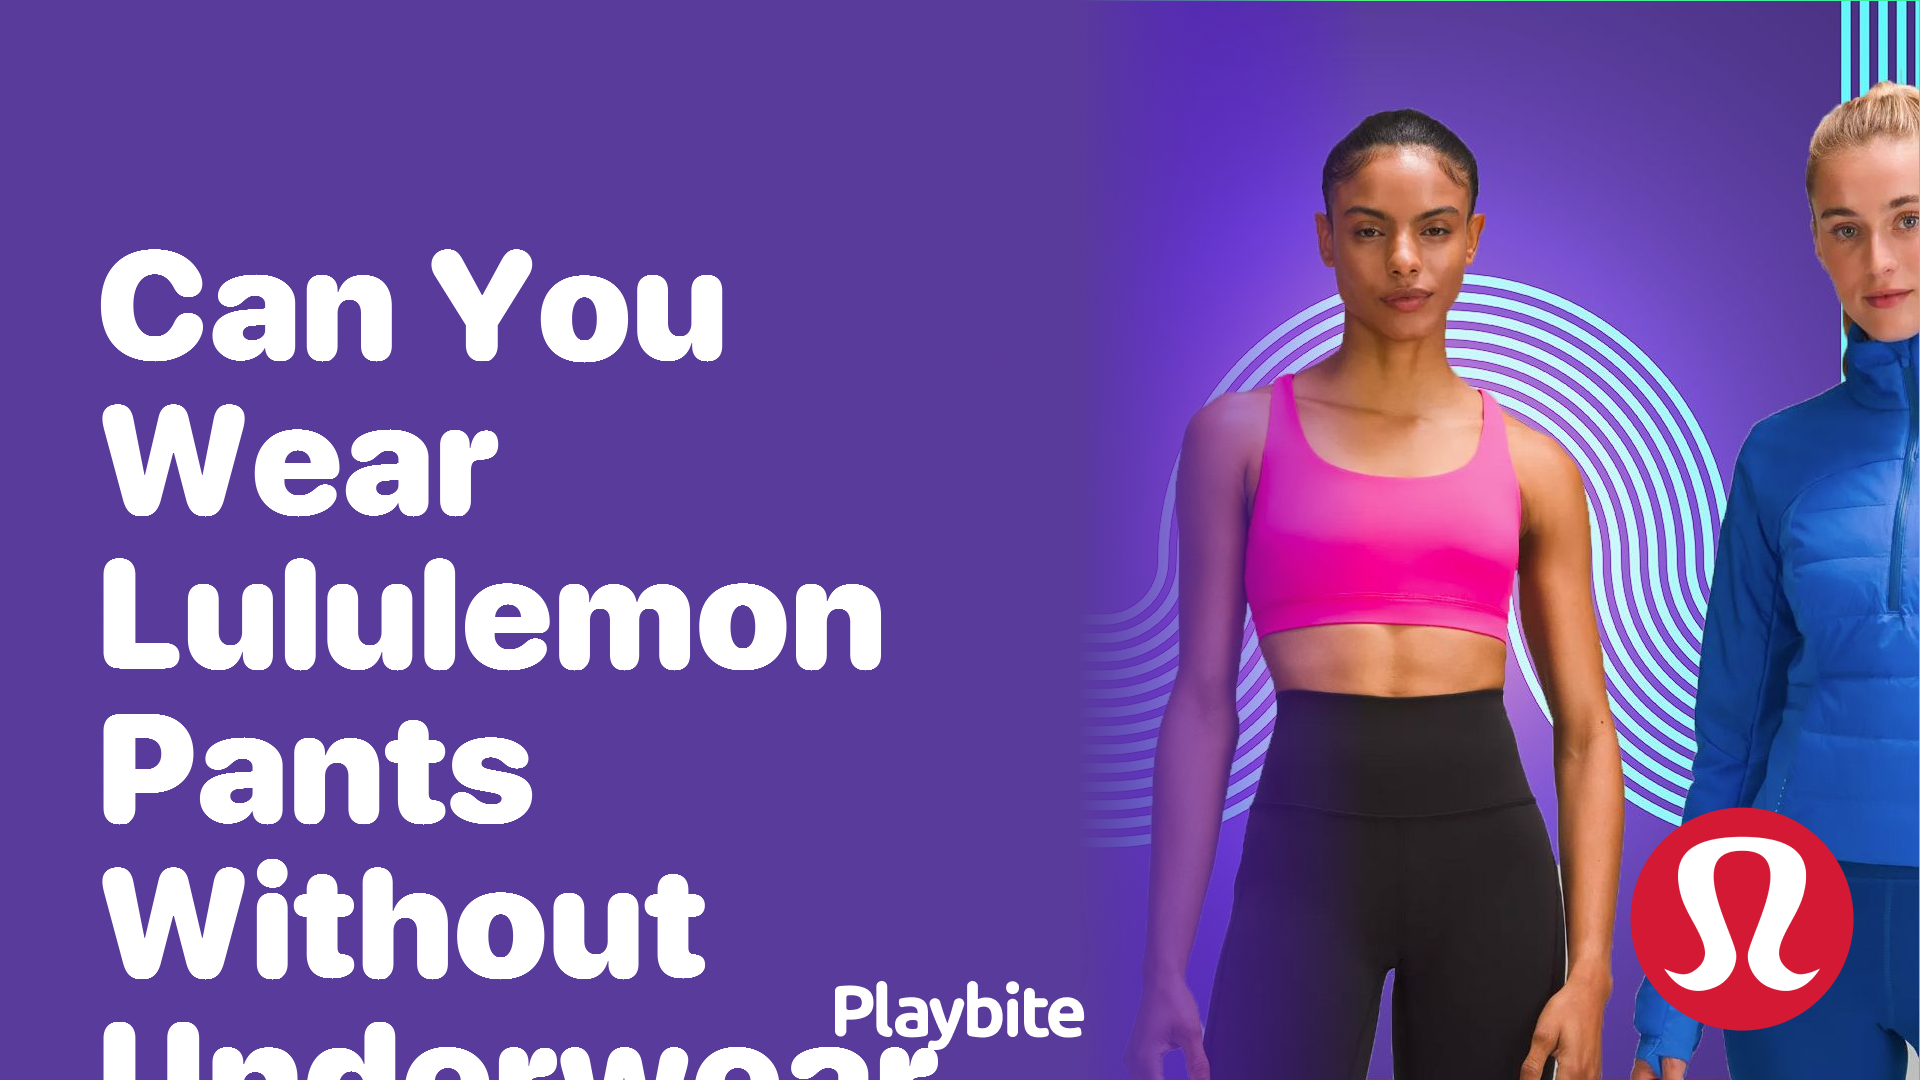 Do You Wear Underwear With Lululemon Pants? - Playbite